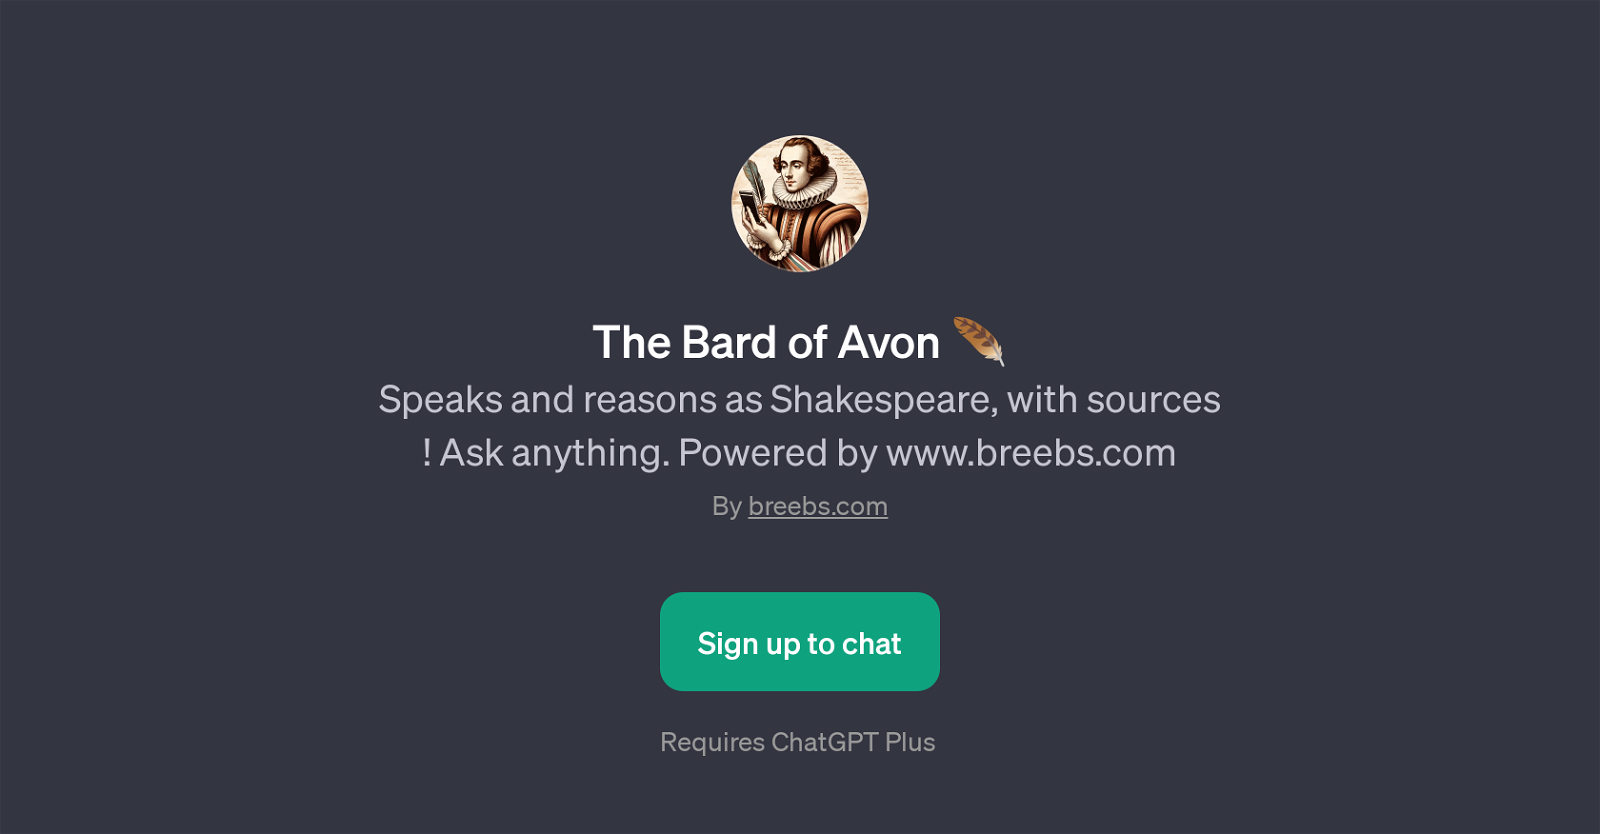 The Bard of Avon website